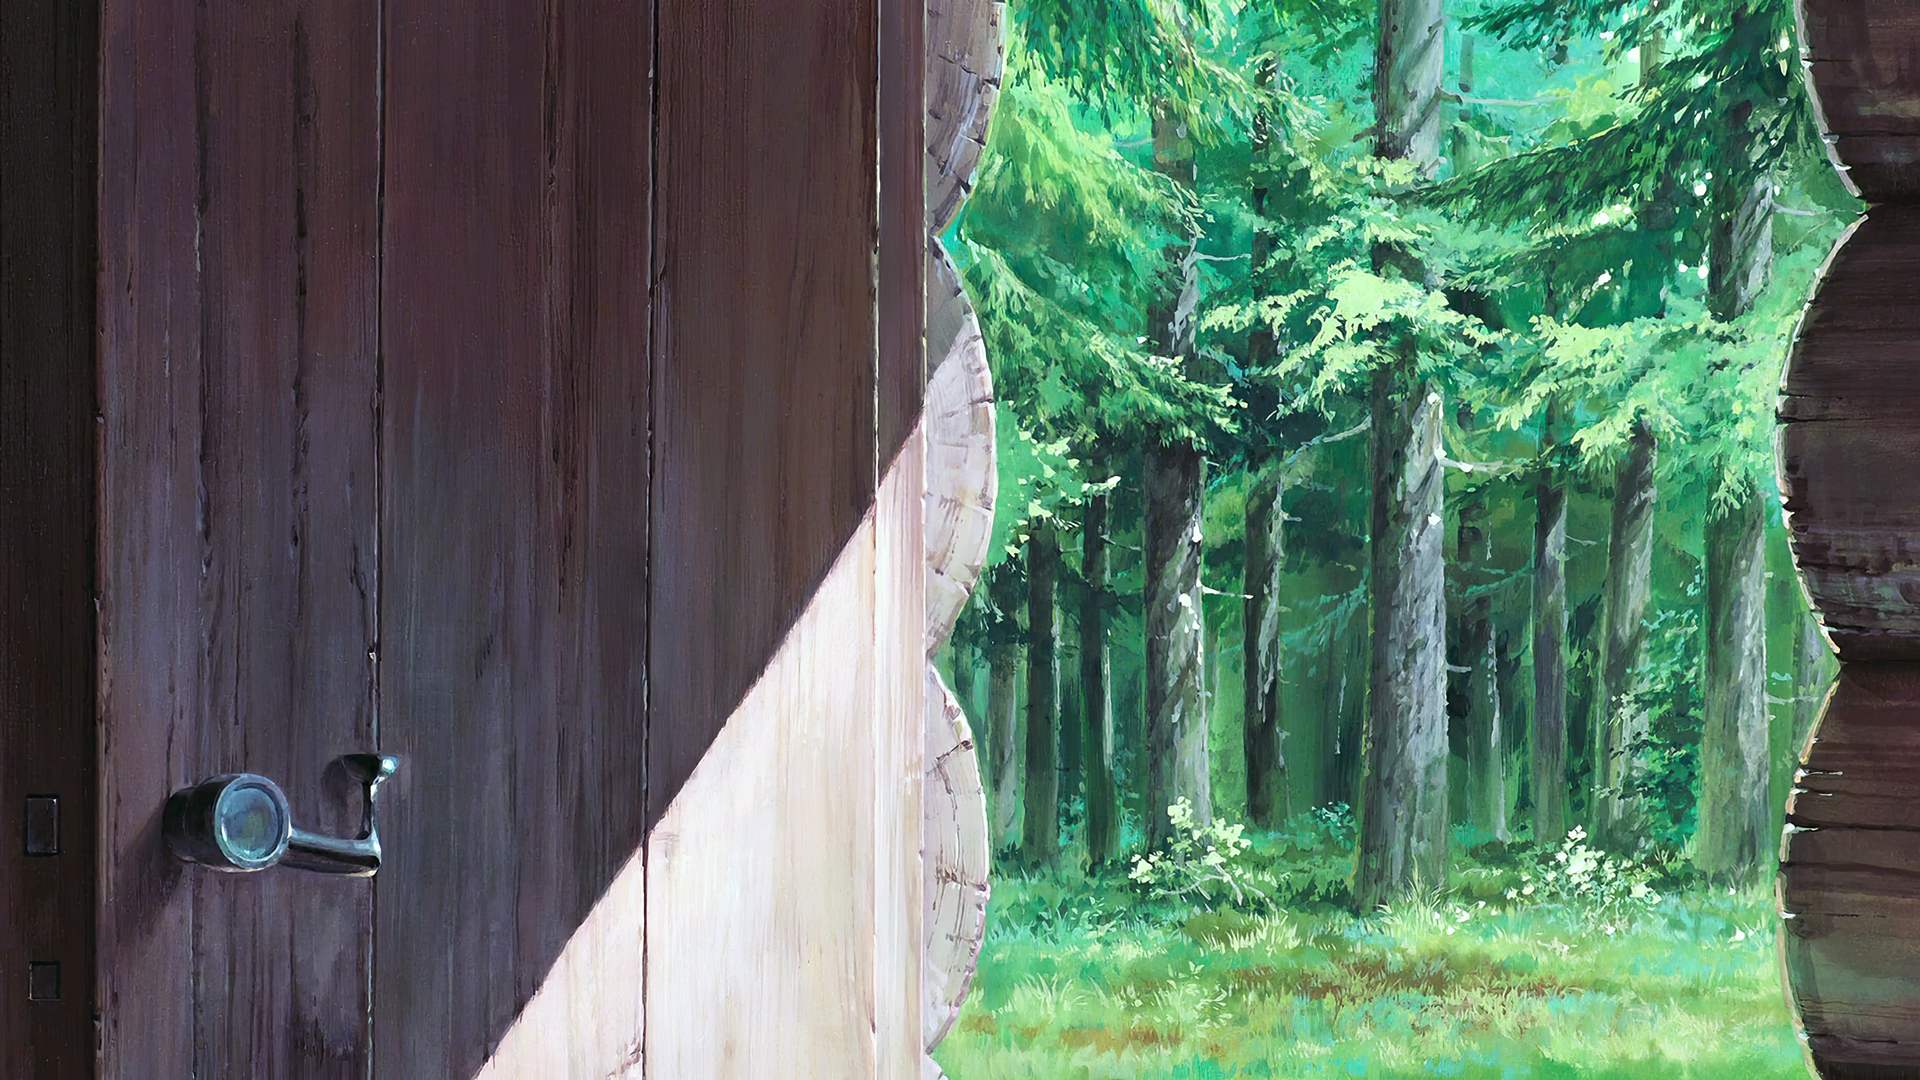 Anime 1920x1080 Kiki's Delivery Service animated movies anime animation film stills Studio Ghibli Hayao Miyazaki forest door cabin trees